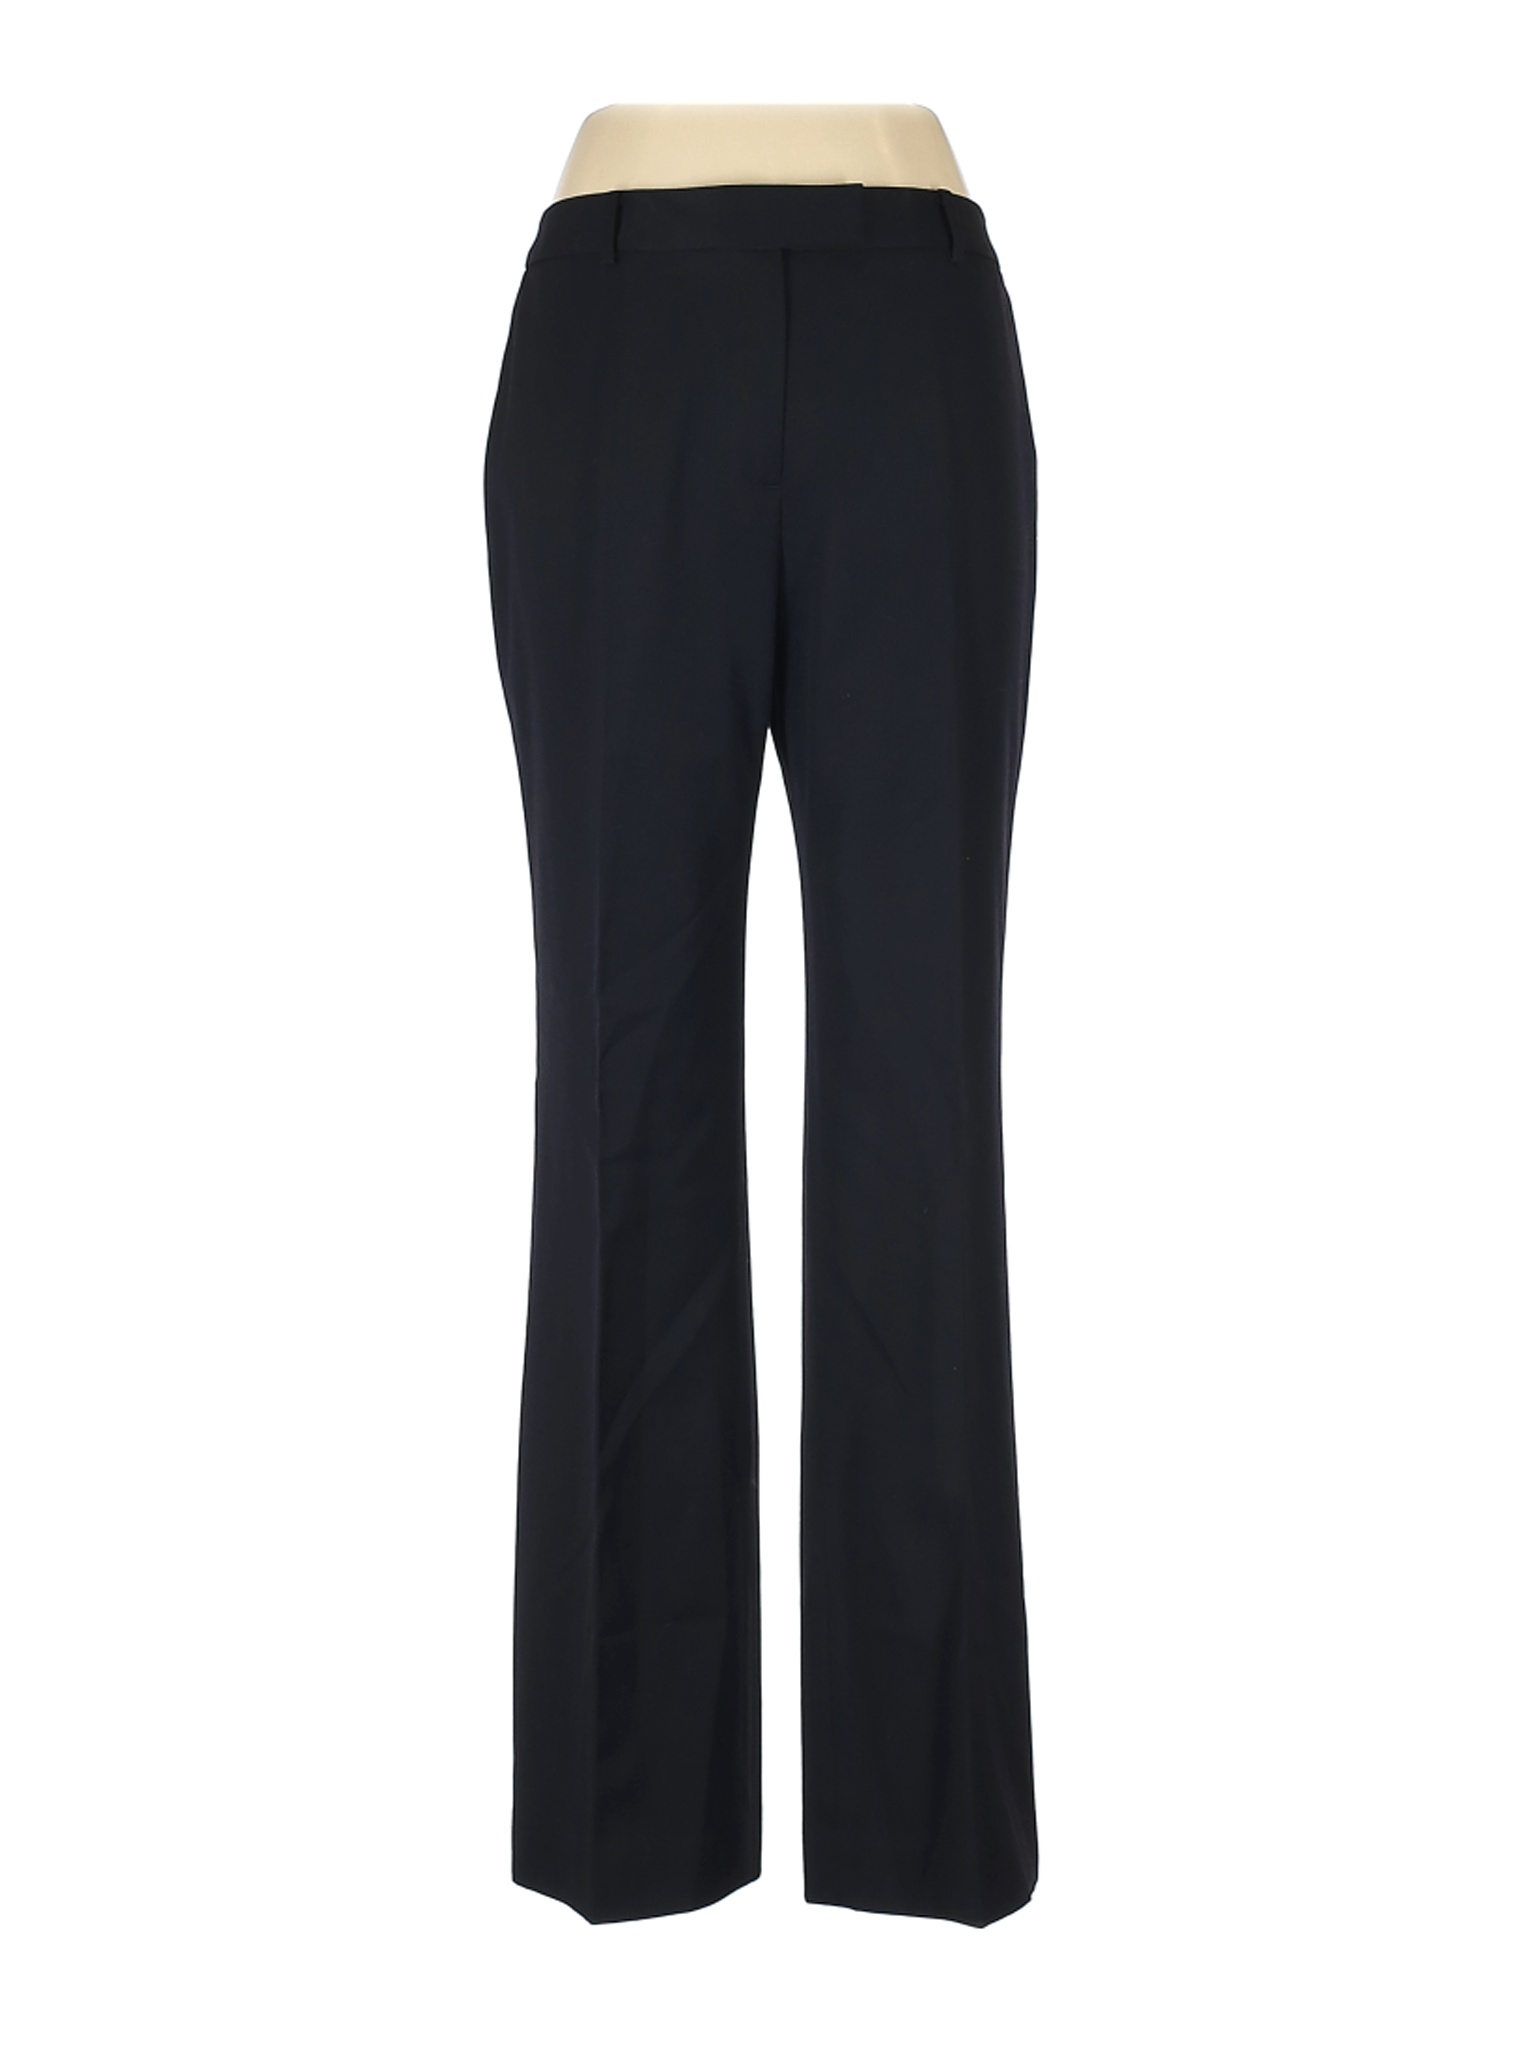 Brooks Brothers 346 Women Black Dress Pants 10 | eBay